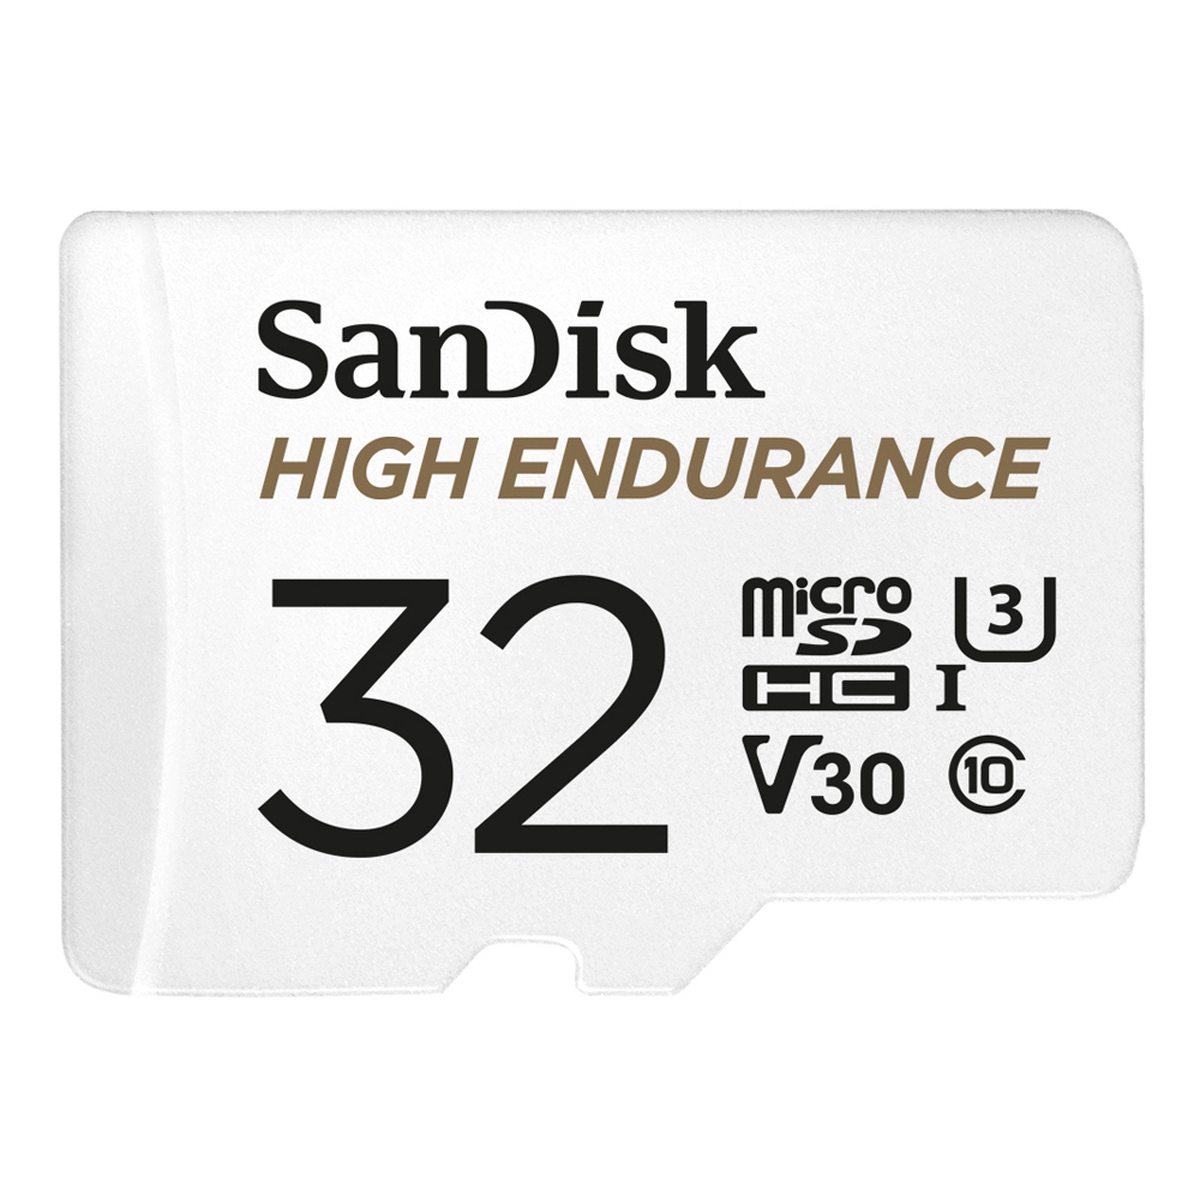 SanDisk High Endurance 32 GB microSDHC Karte mit SD-Adapter